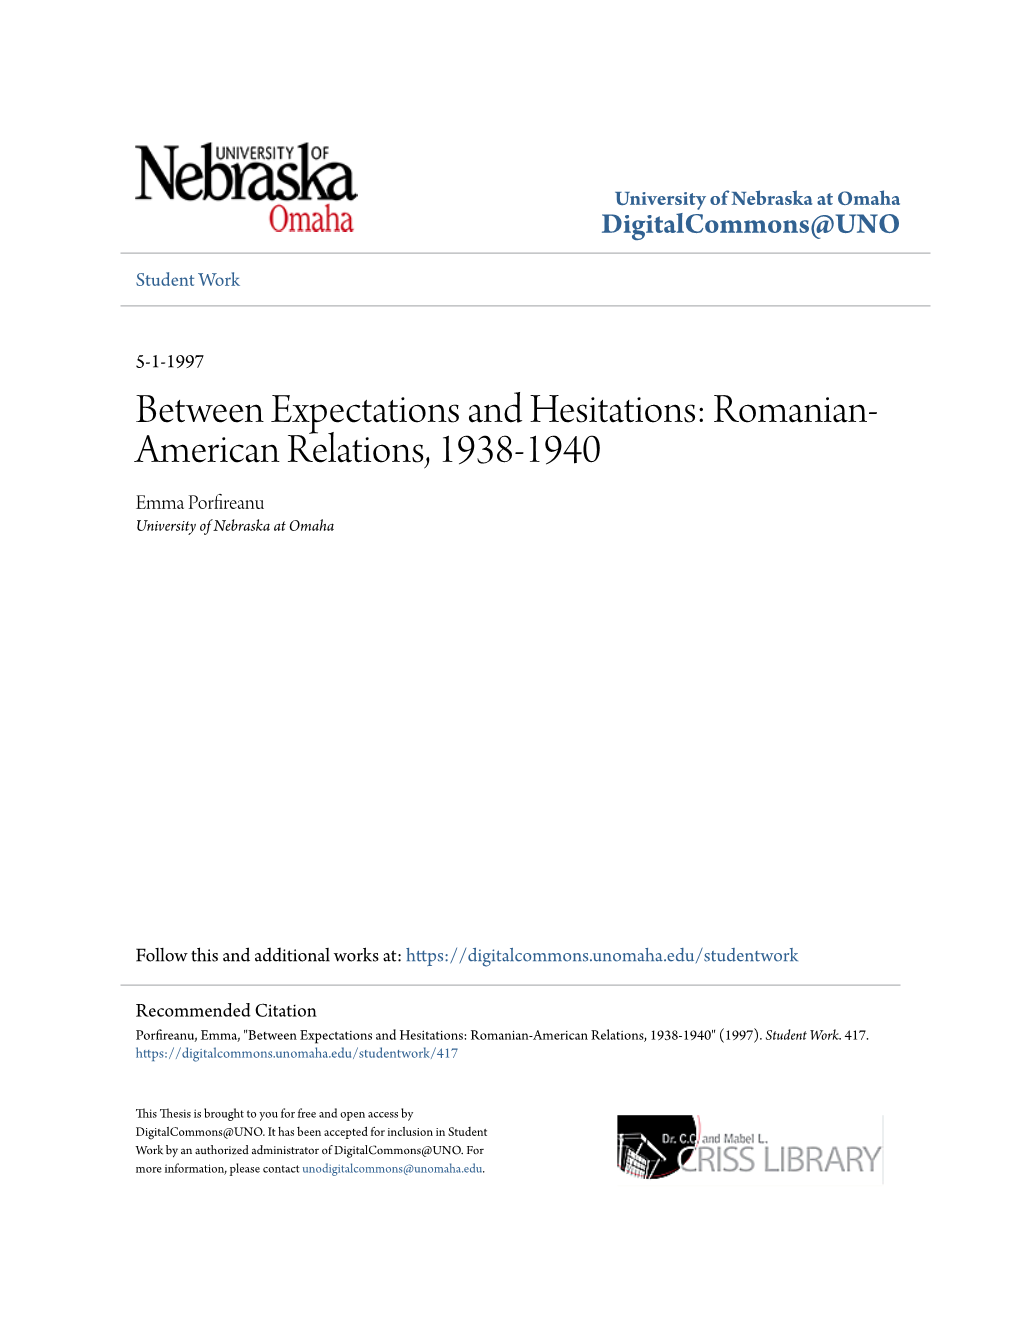 Romanian-American Relations, 1938-1940" (1997)